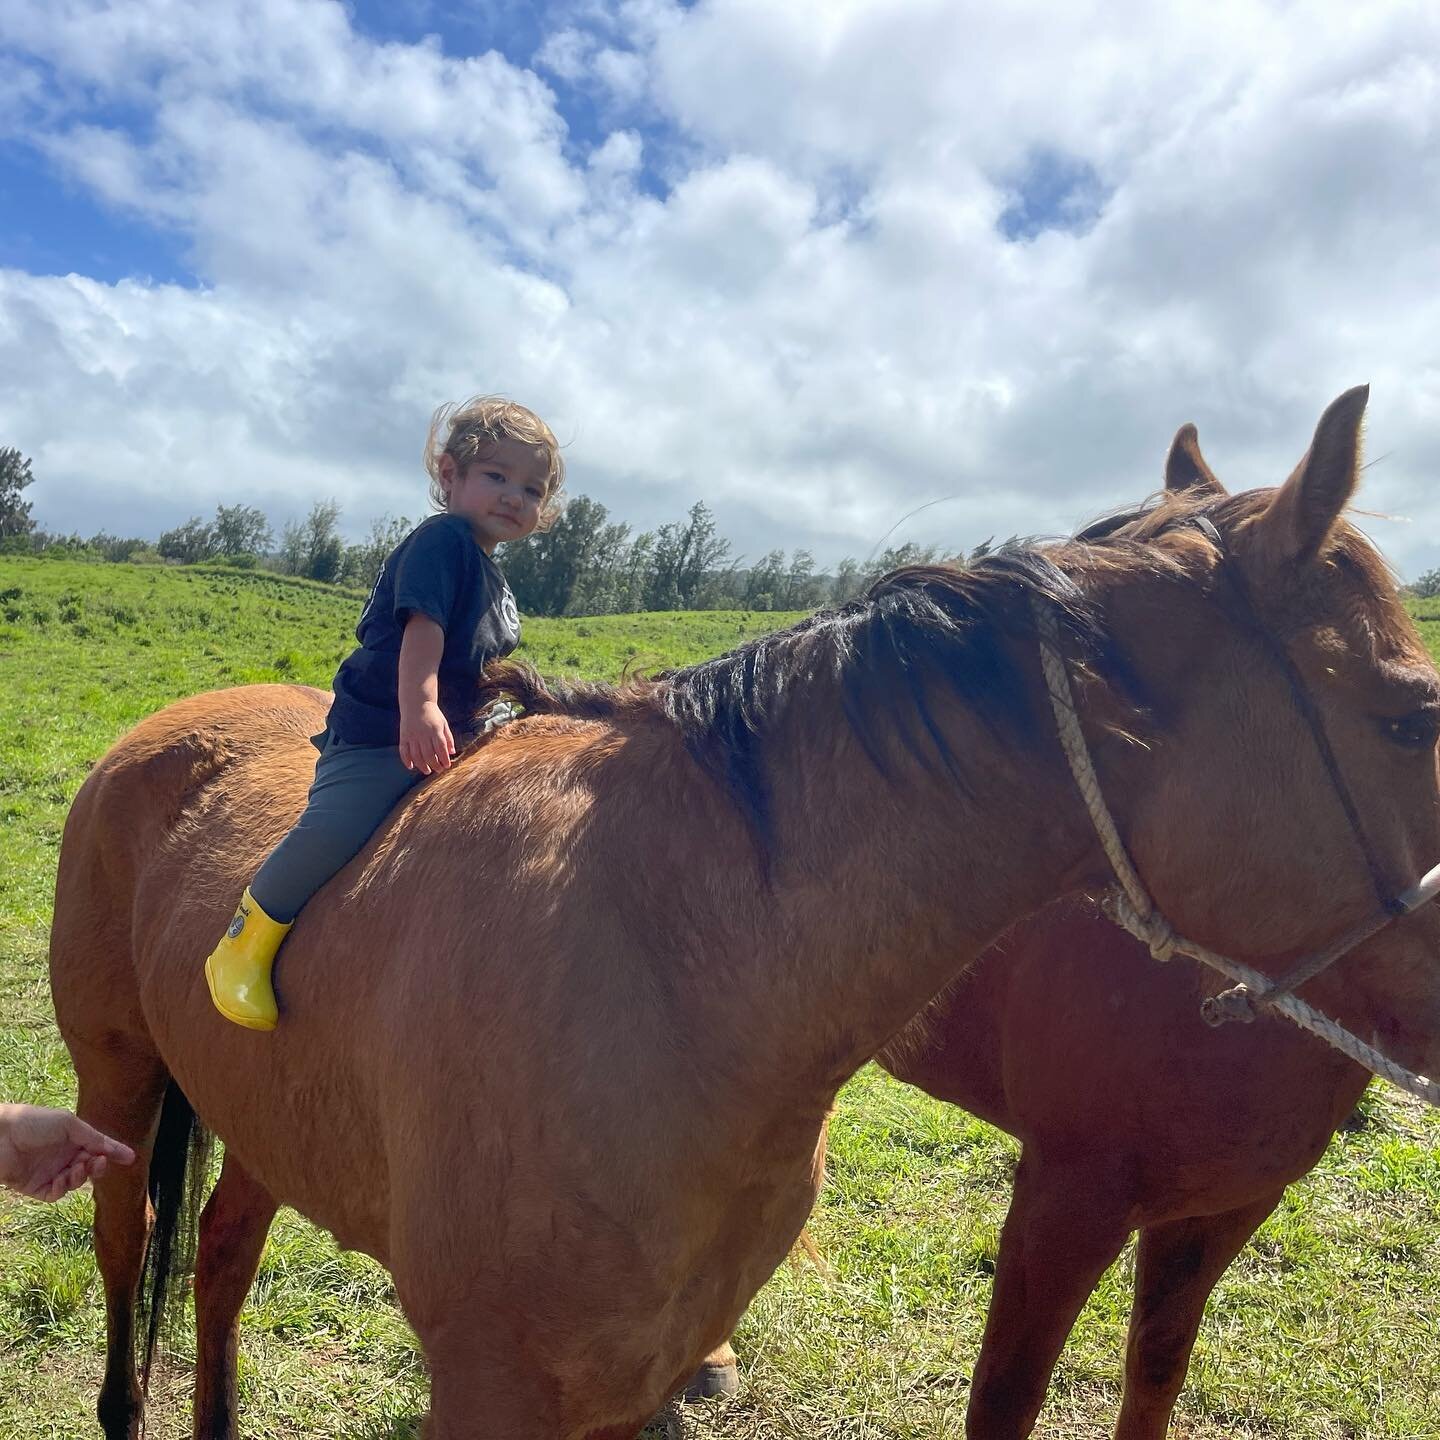 Nothing makes me happier than being able to share this with him❤️Sunday&rsquo;s in the saddle. 

#lifeonthebigisland #northkohala #littlecowboy #happiestoutside #kaomeakailikane #mymoopuna